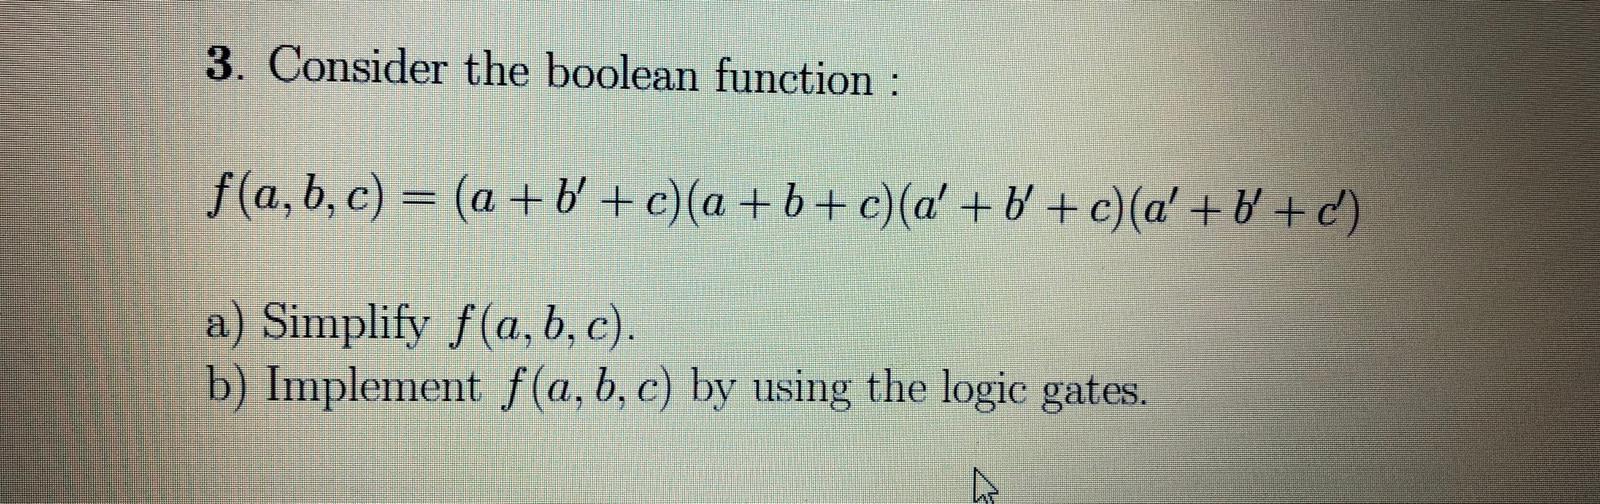 3. Consider the boolean function : f(a, b, c) = (a + b + c)(a + b + c)(a + b + c)(a + b + c) a) Simplify f(a,